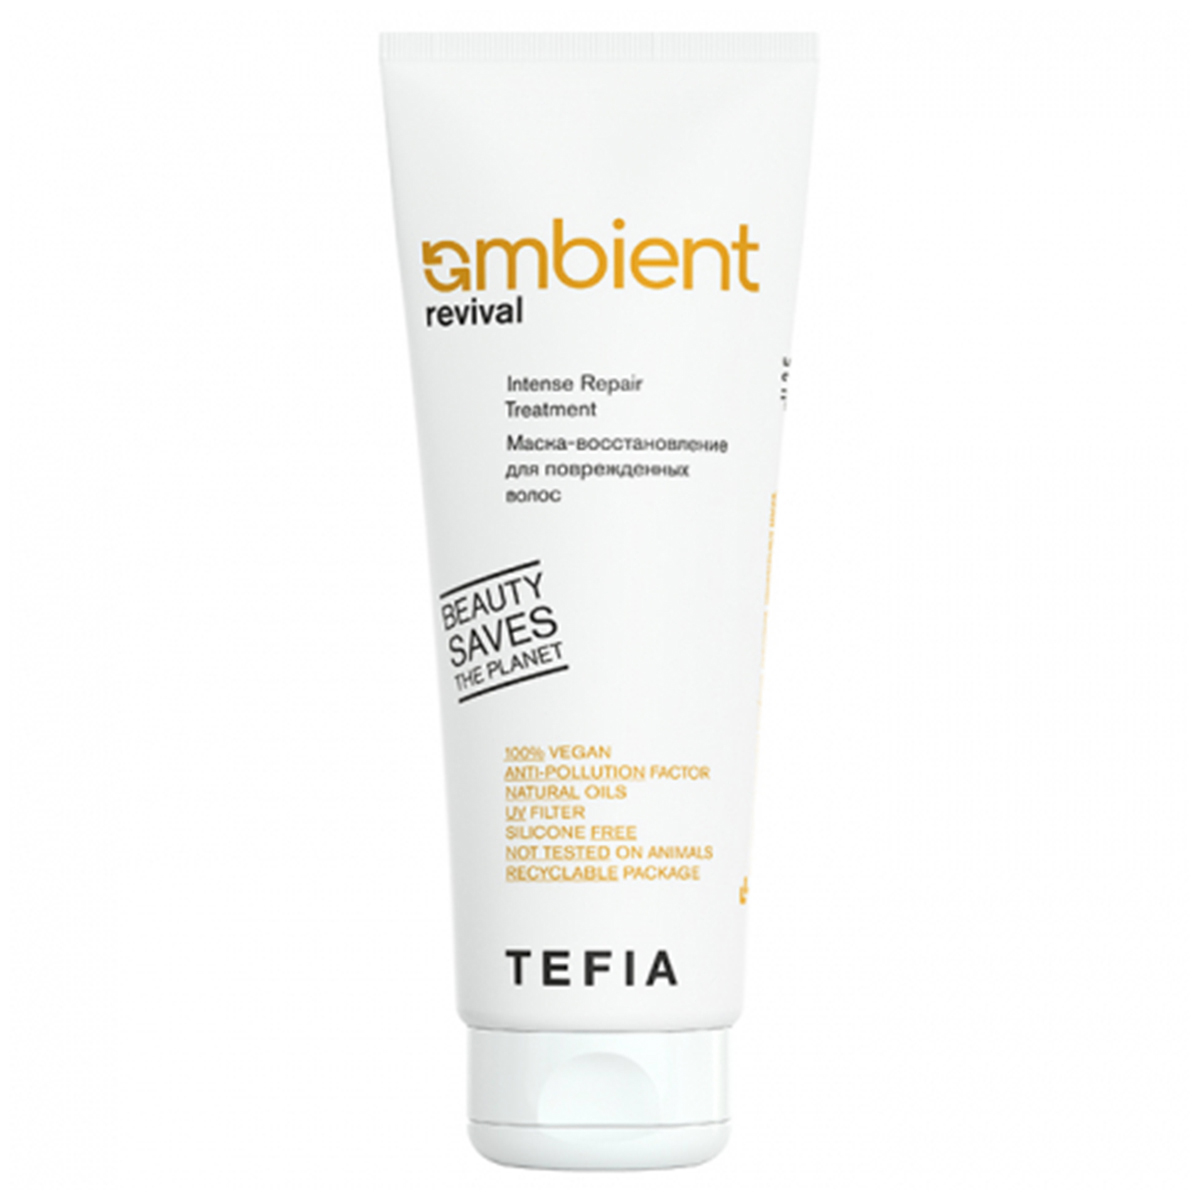 Tefia Маска-восстановление для поврежденных волос, 250 мл (Tefia, Ambient) tefia спрей филлер для поврежденных волос 250 мл tefia ambient